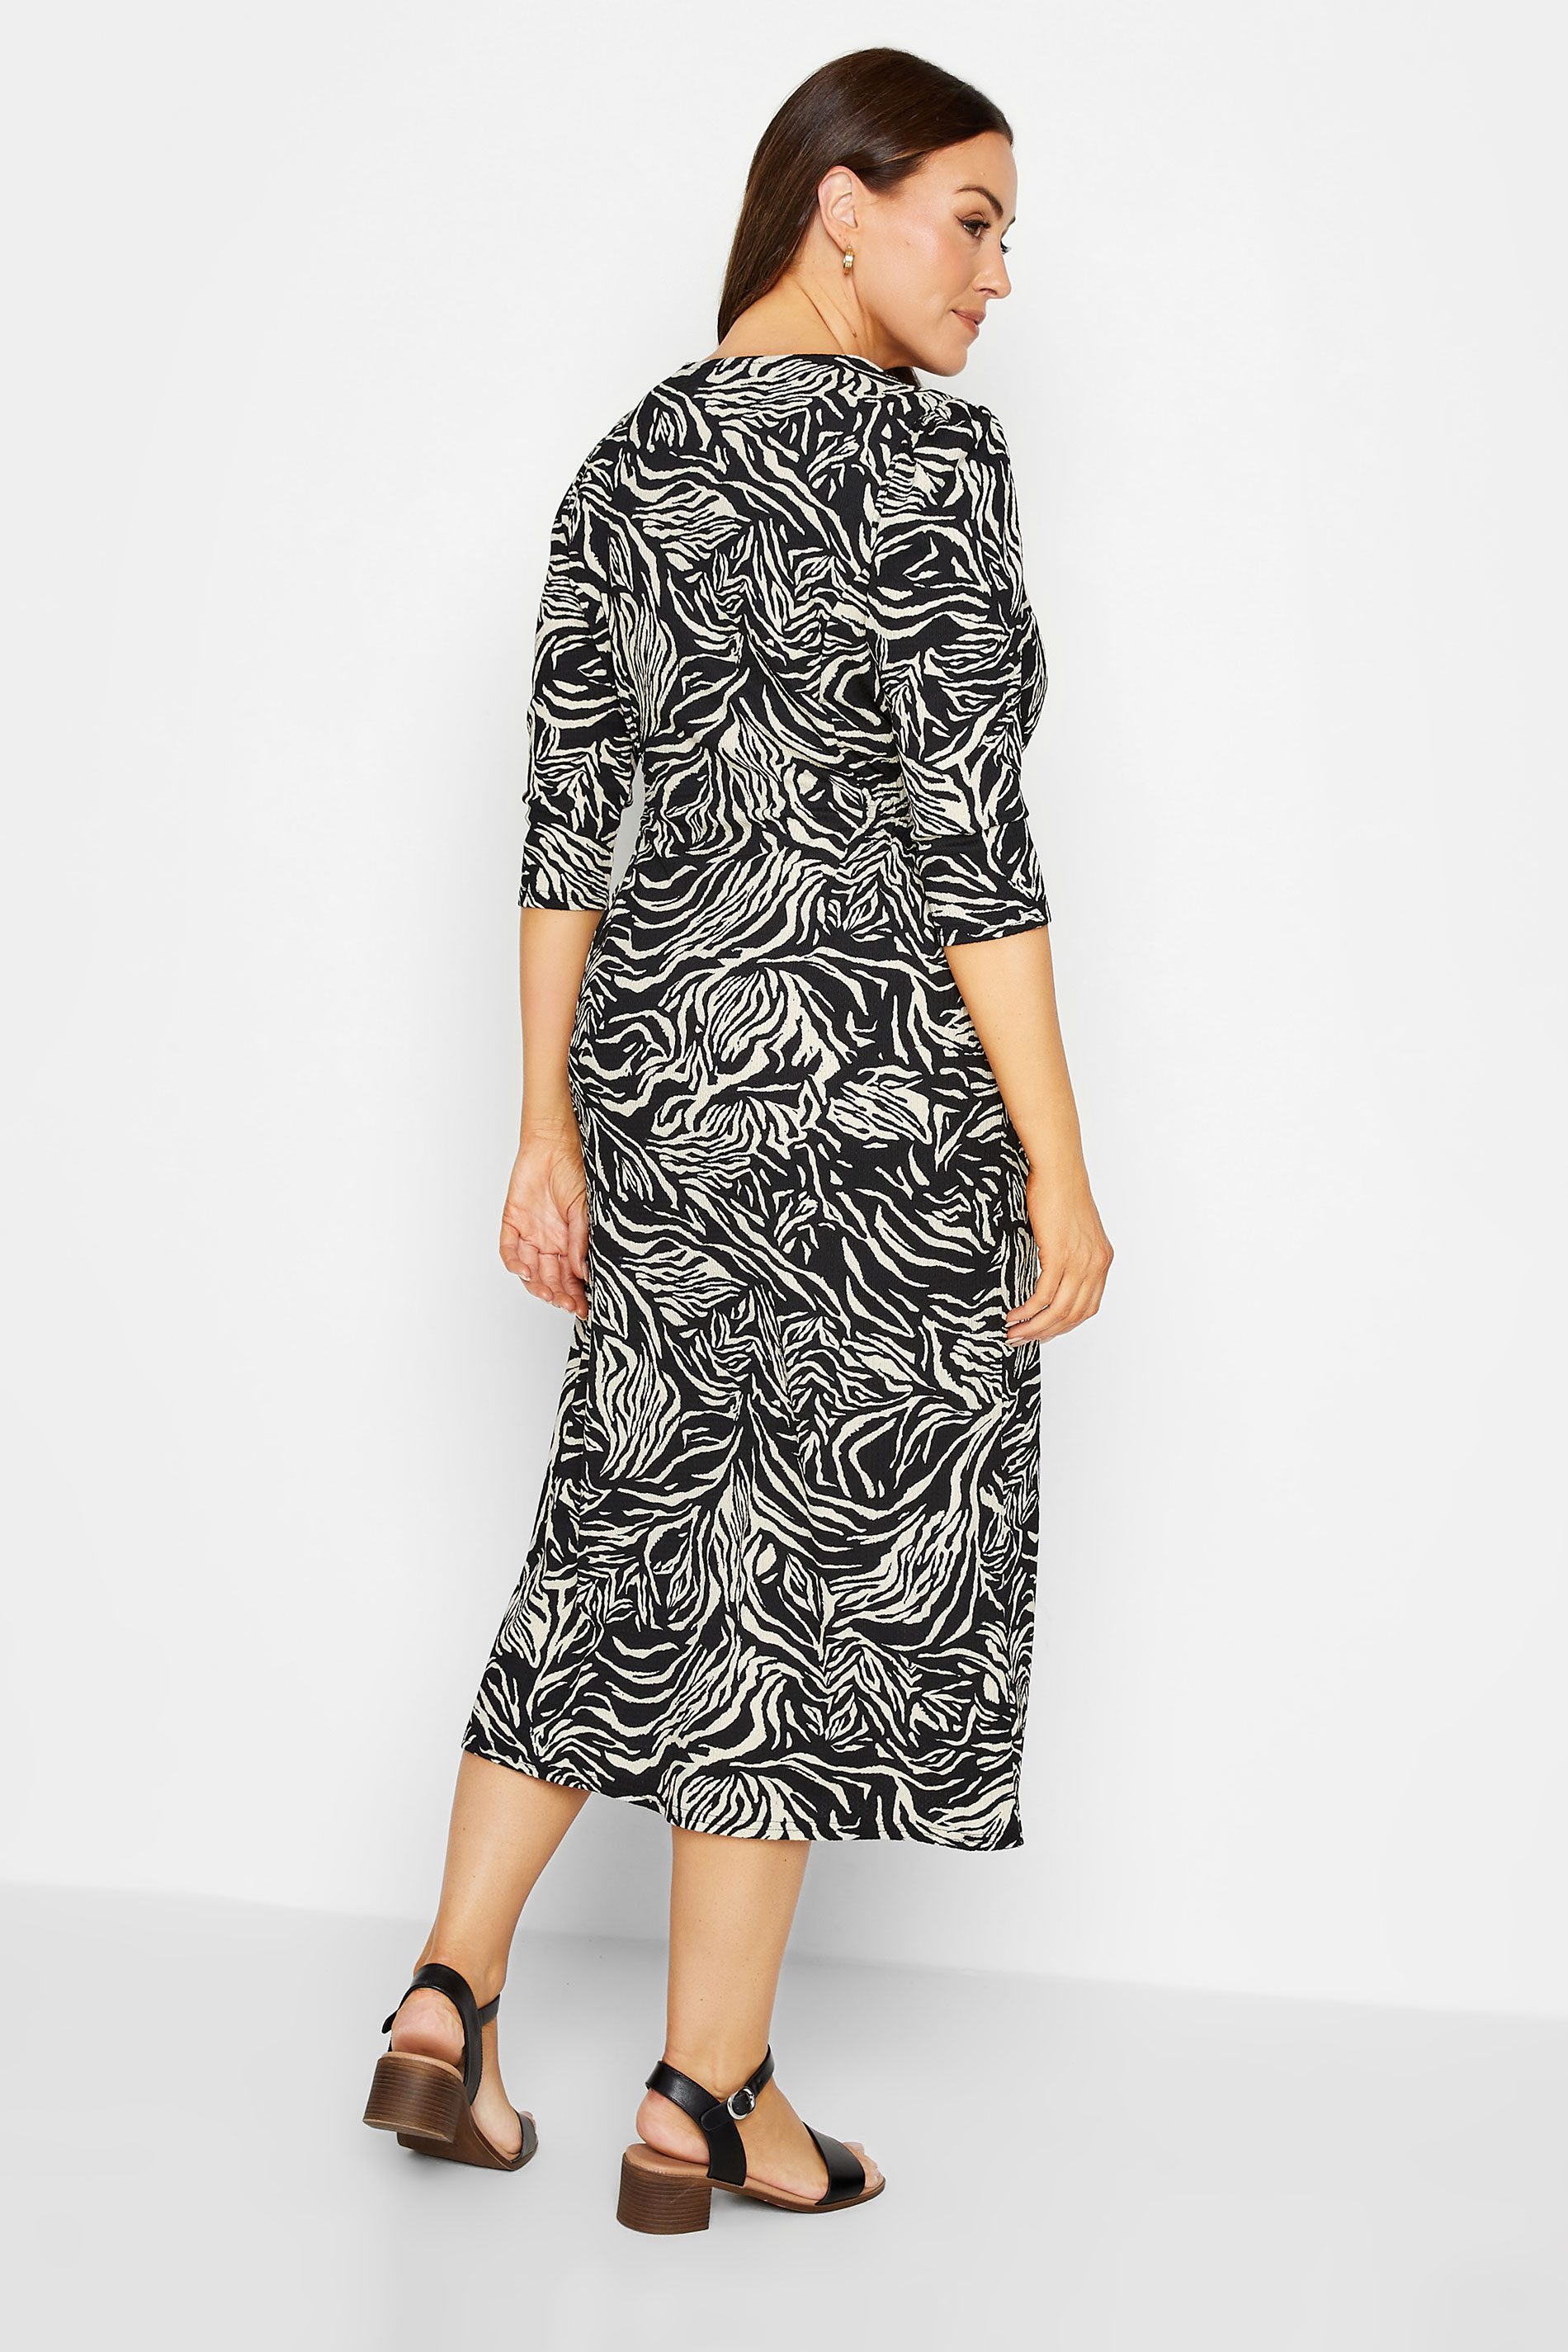 M&Co Black Zebra Print Button Through Midaxi Dress | M&Co 3